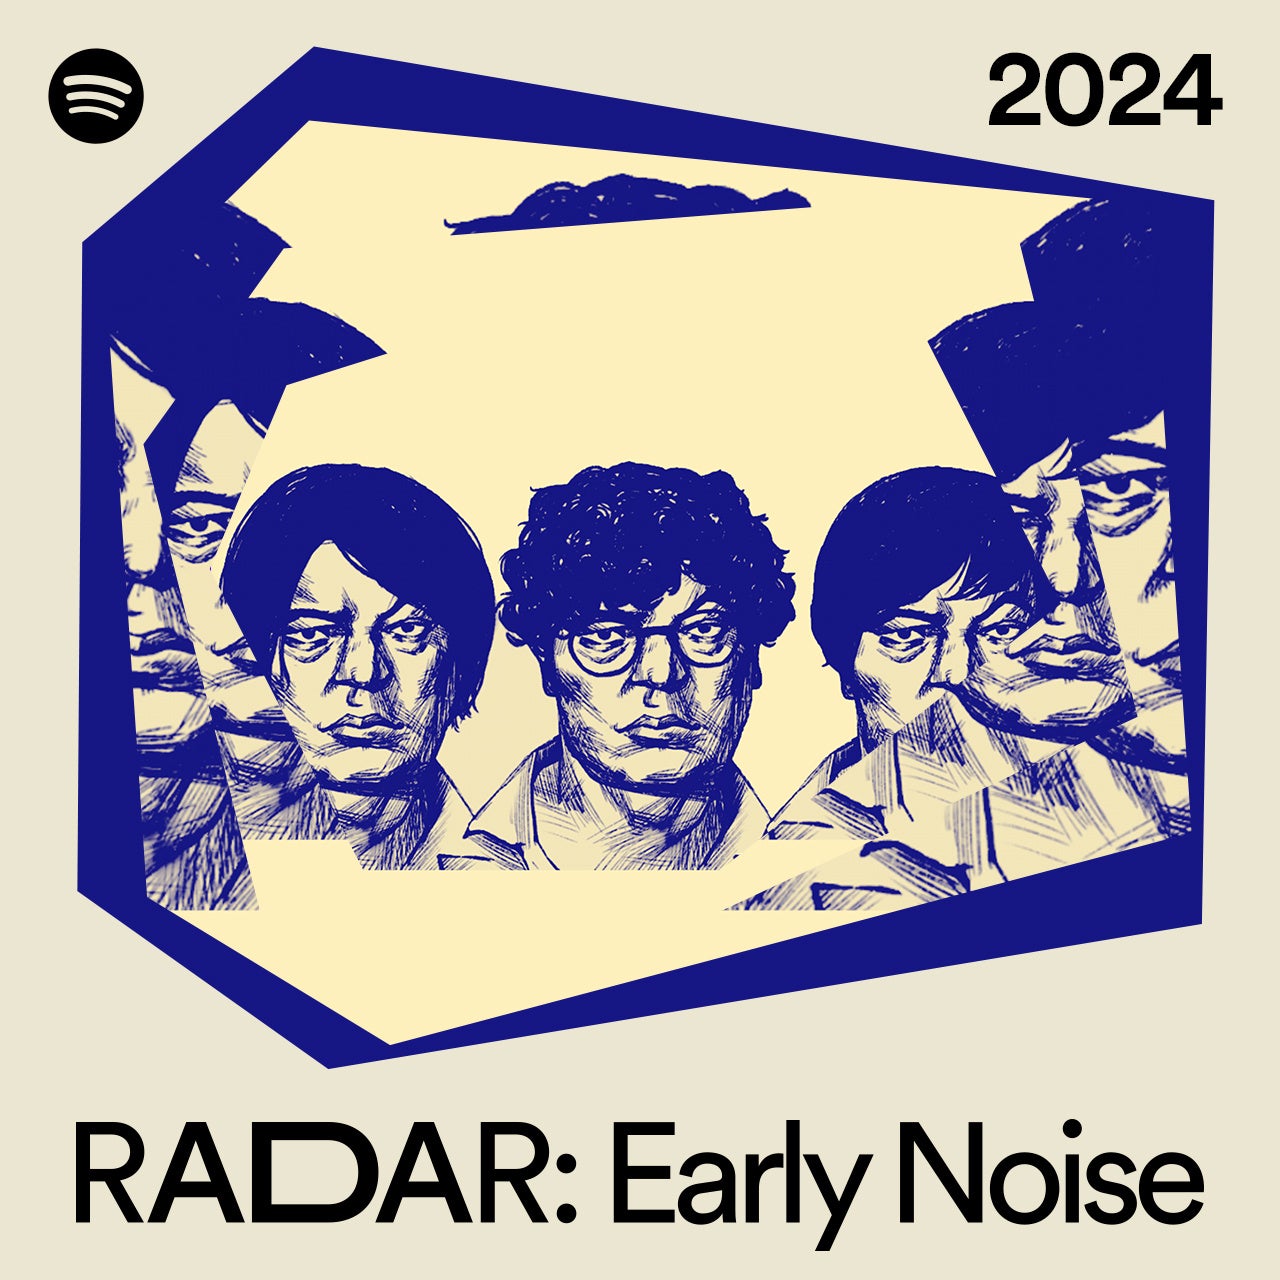 Spotifyが2024年に躍進を期待する次世代アーティスト「RADAR: Early Noise 2024」を発表